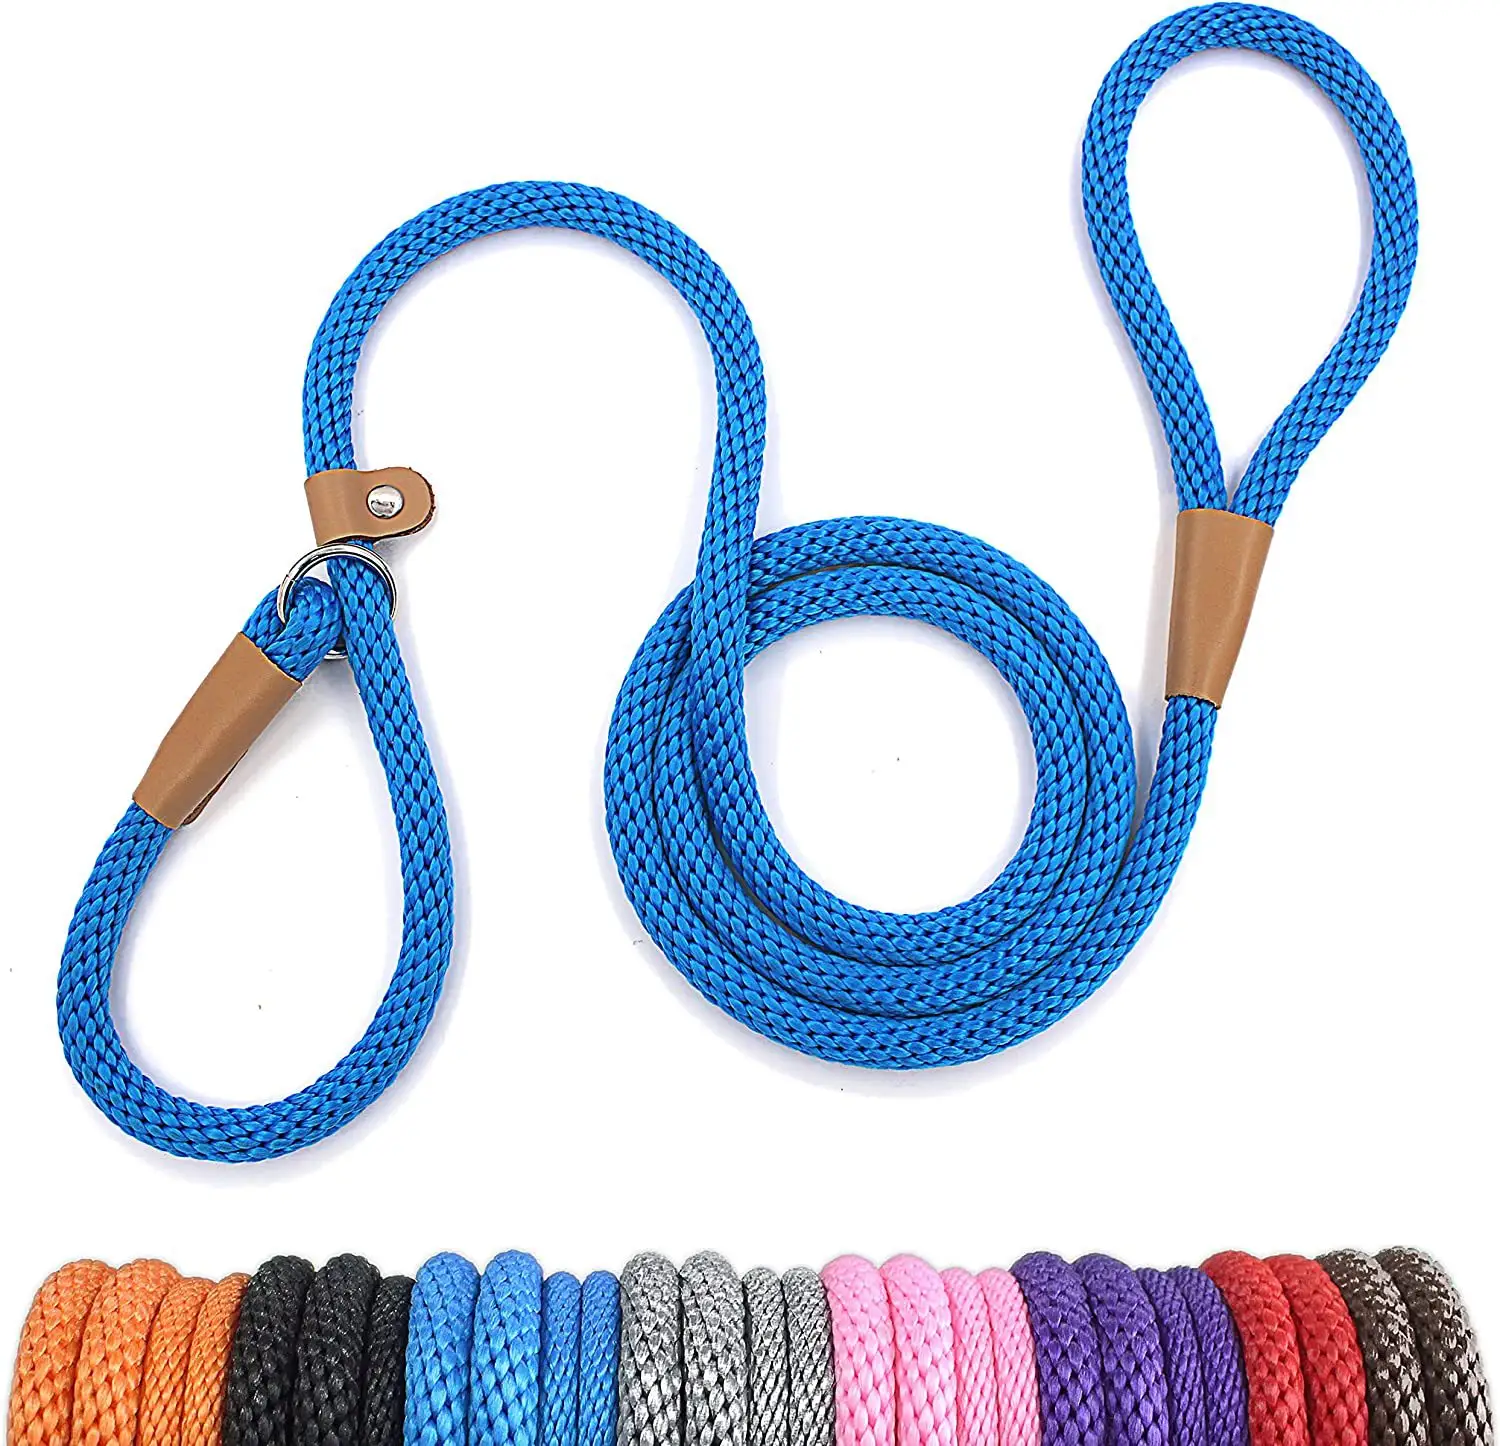 Kingtaleペット用品犬の鎖ロープカスタム犬の鎖犬の首輪と鎖Productosペット用パラマスコット